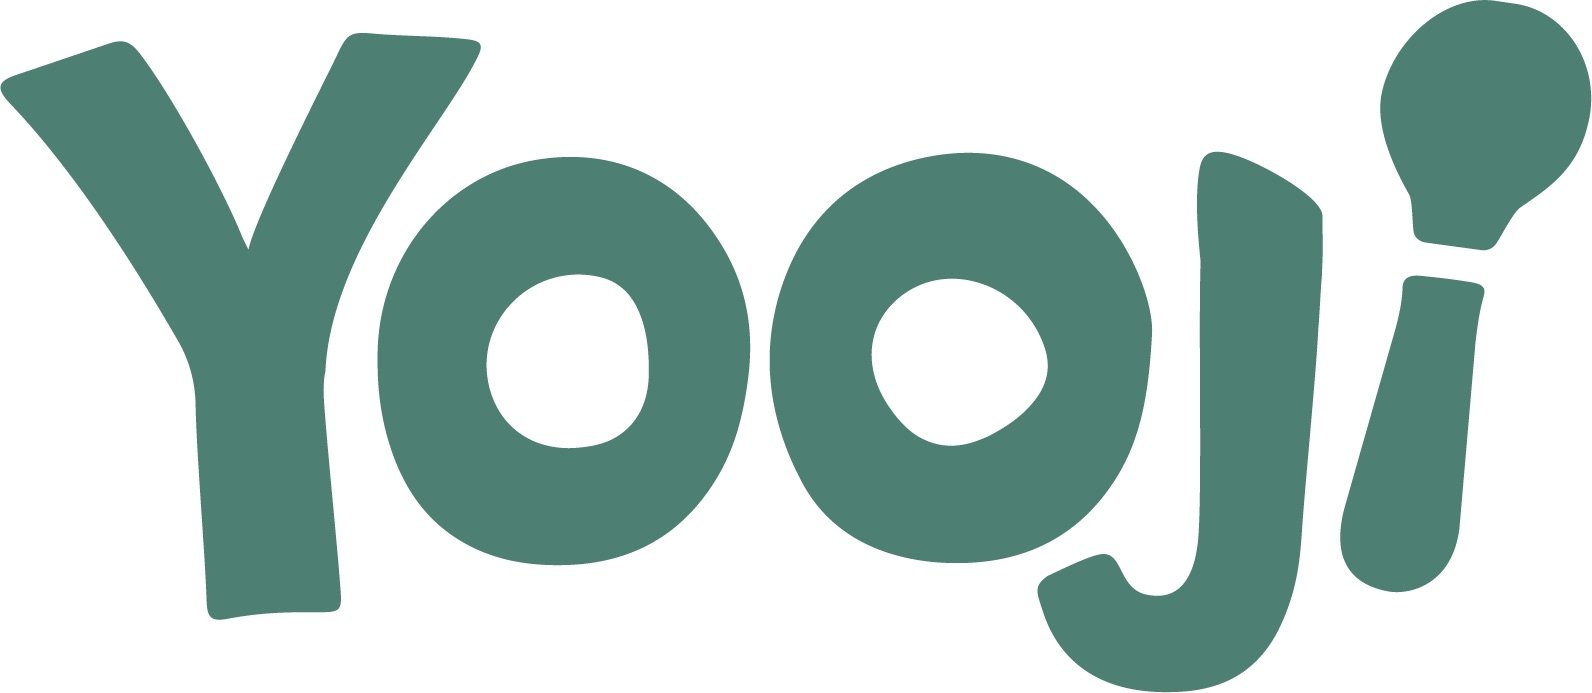 Logo Yooji